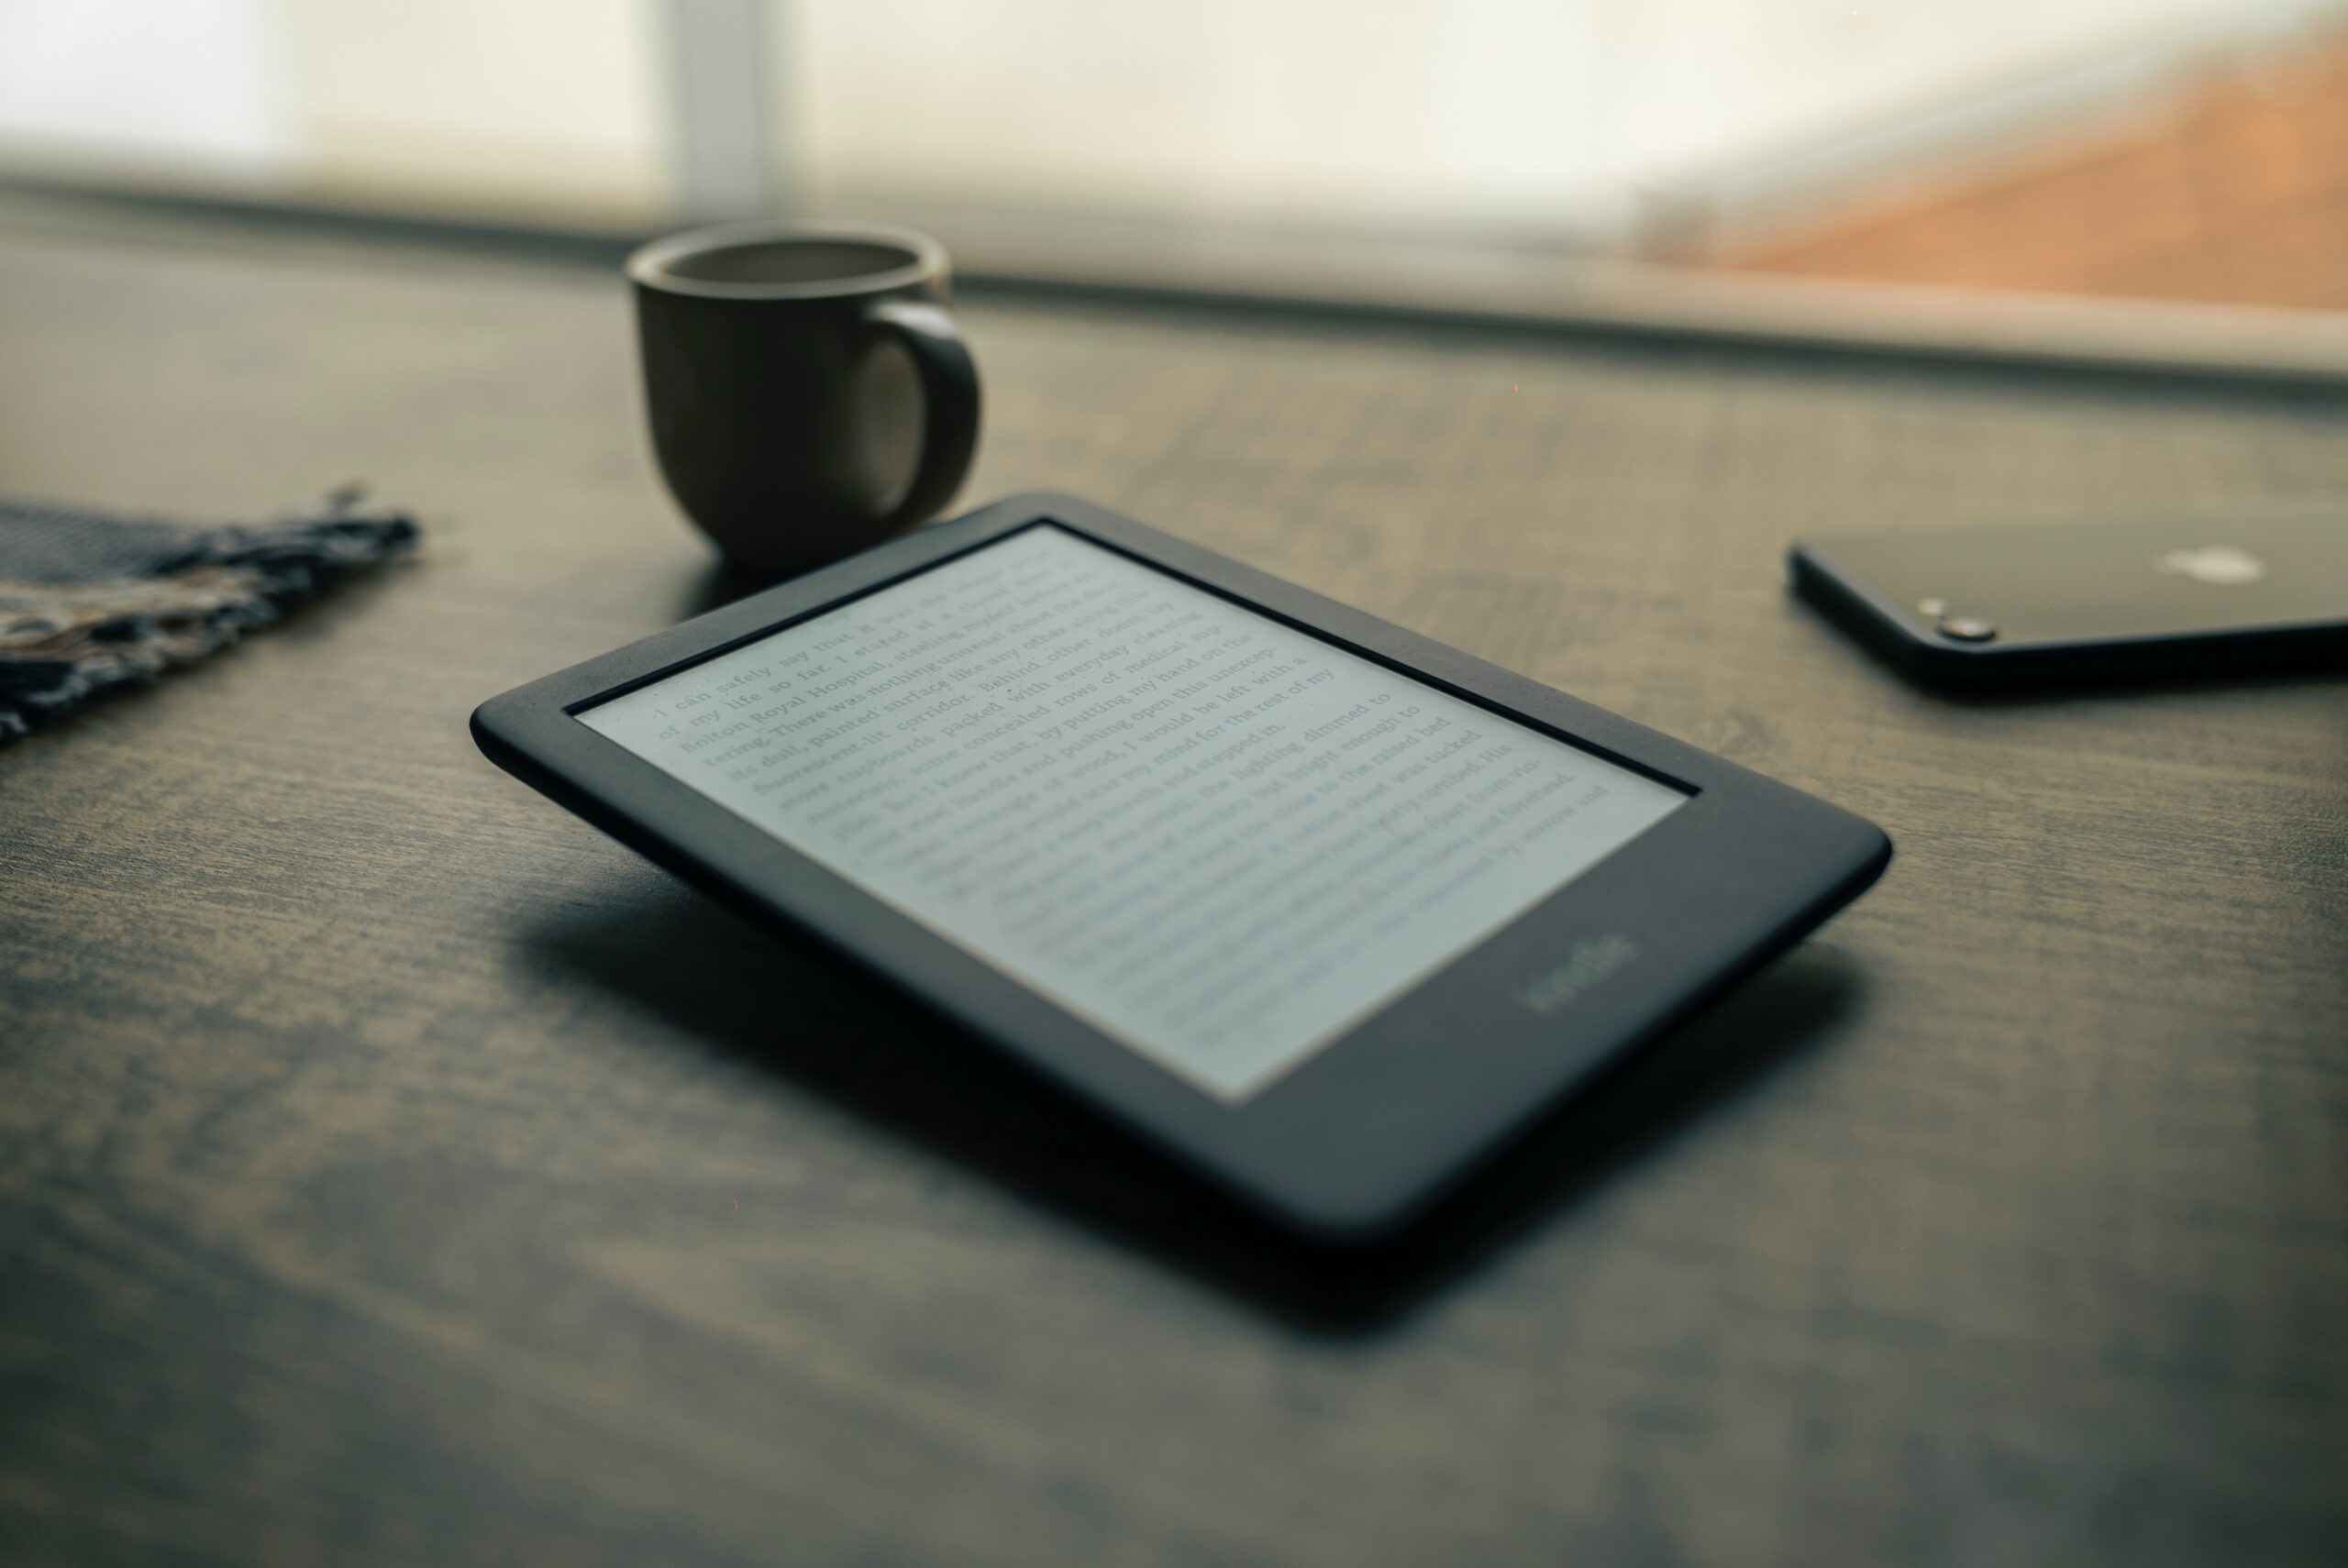 Kindle e-reader on a desk